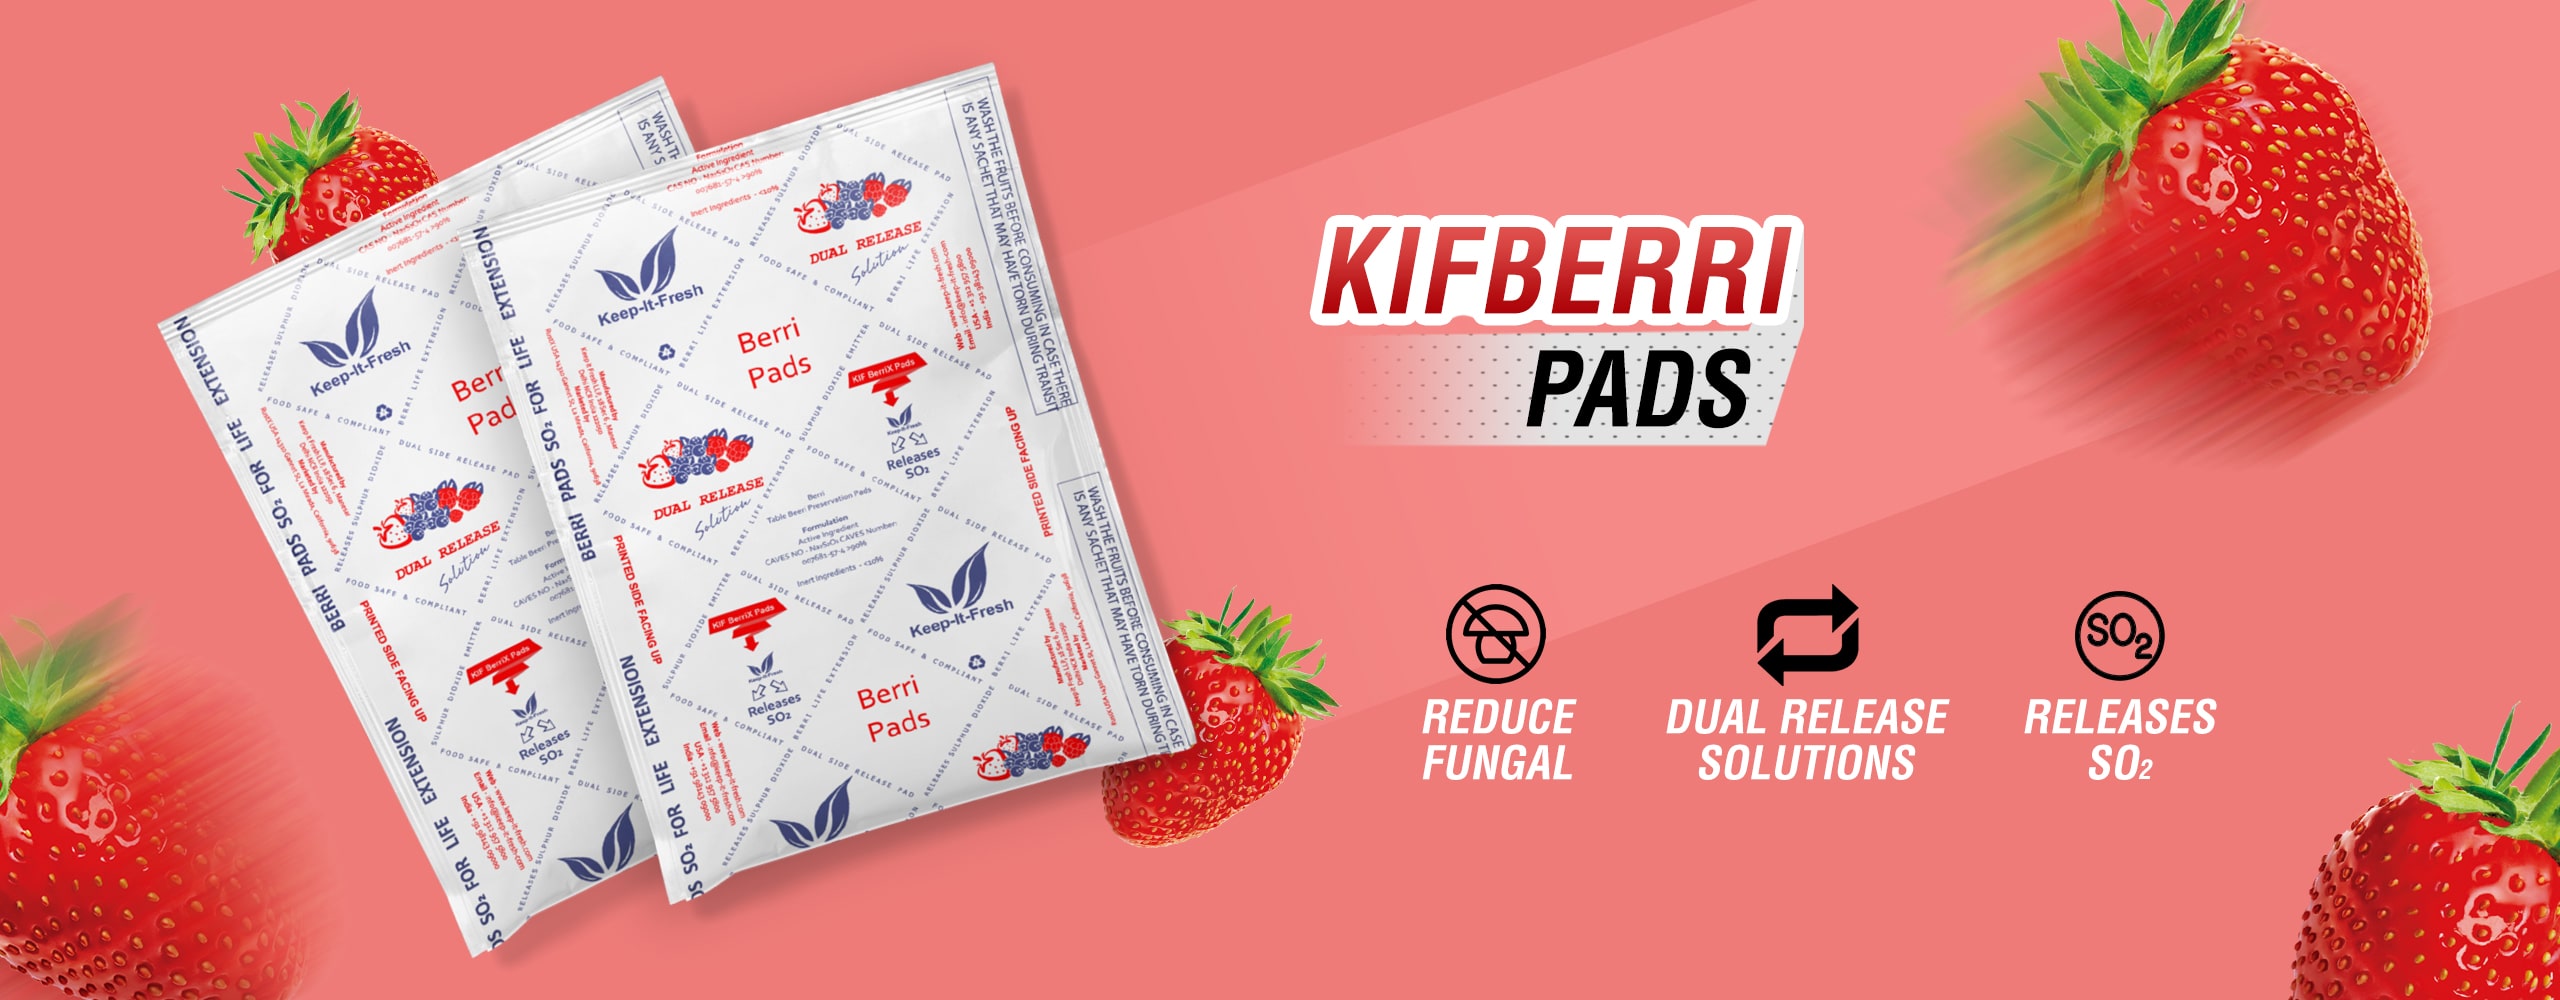 KIF Berry pads